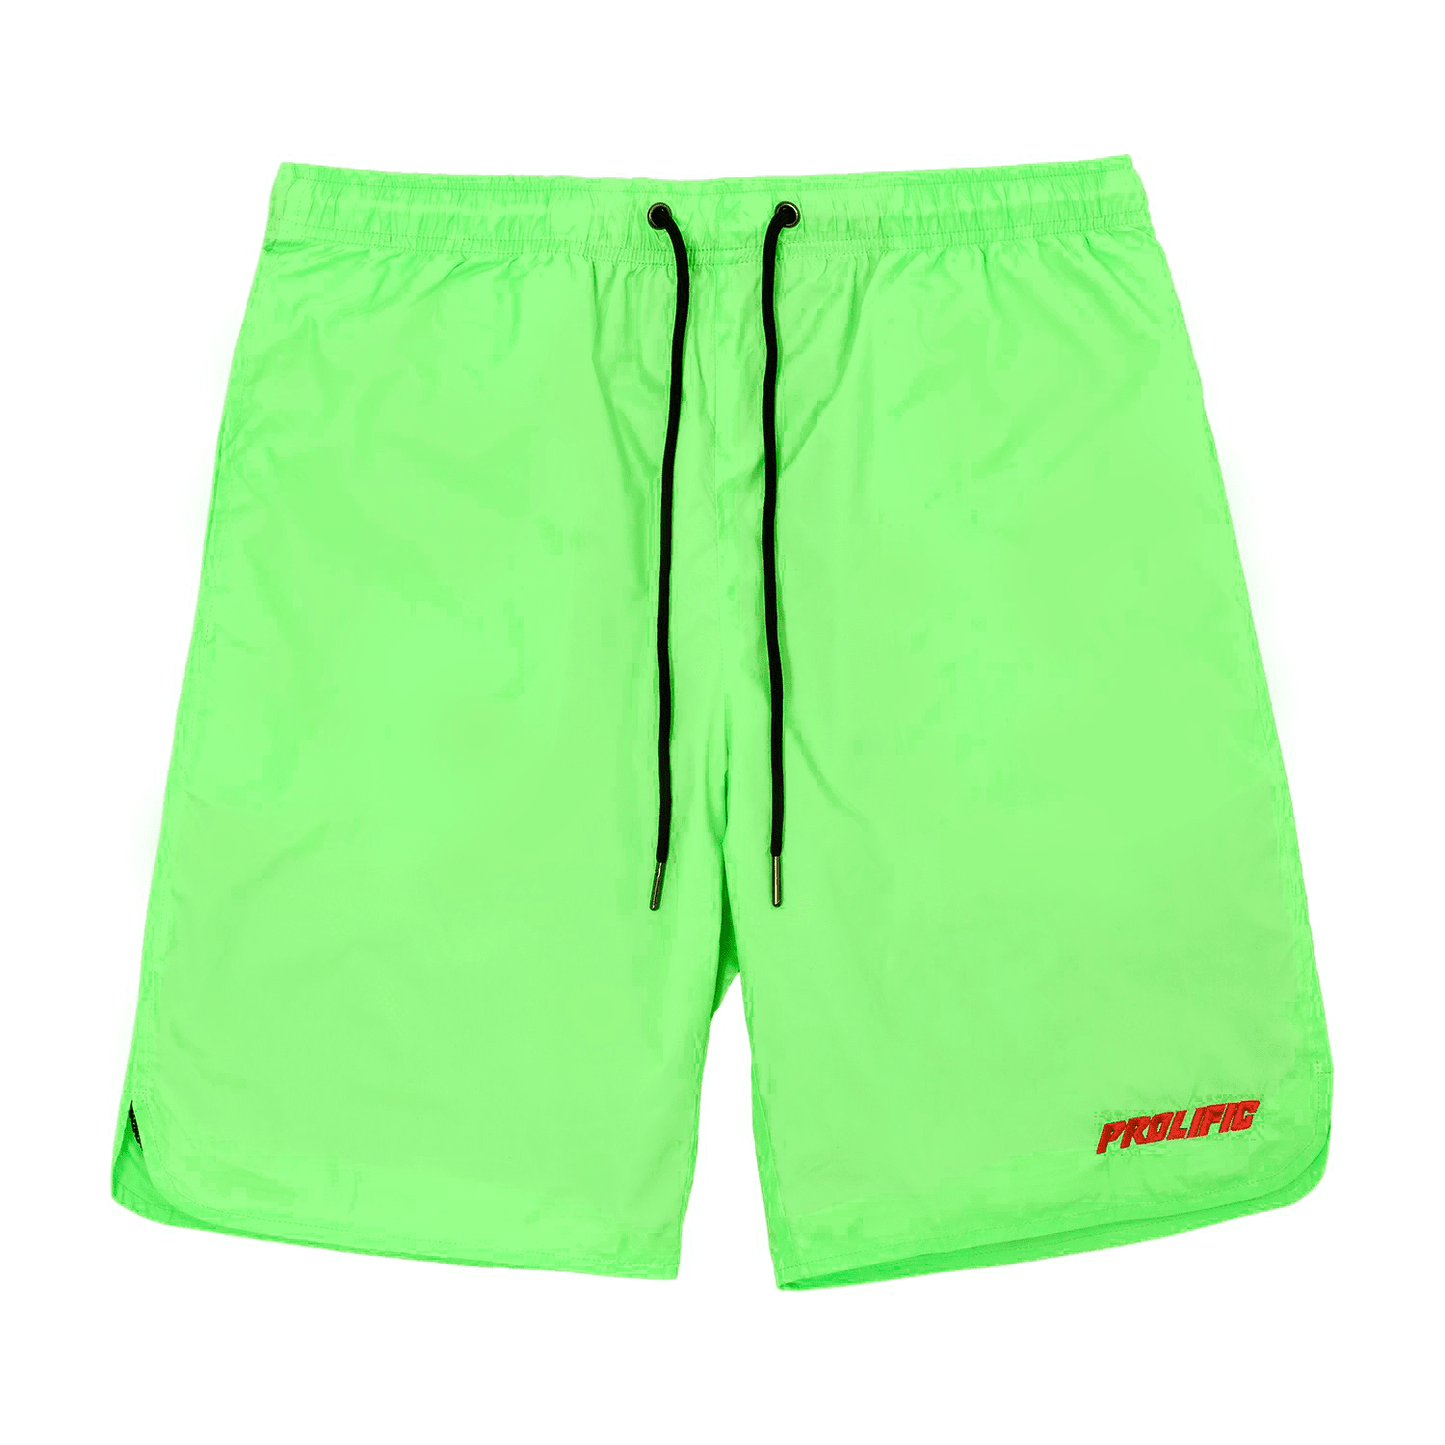 Prolific Neon Green Swim Shorts